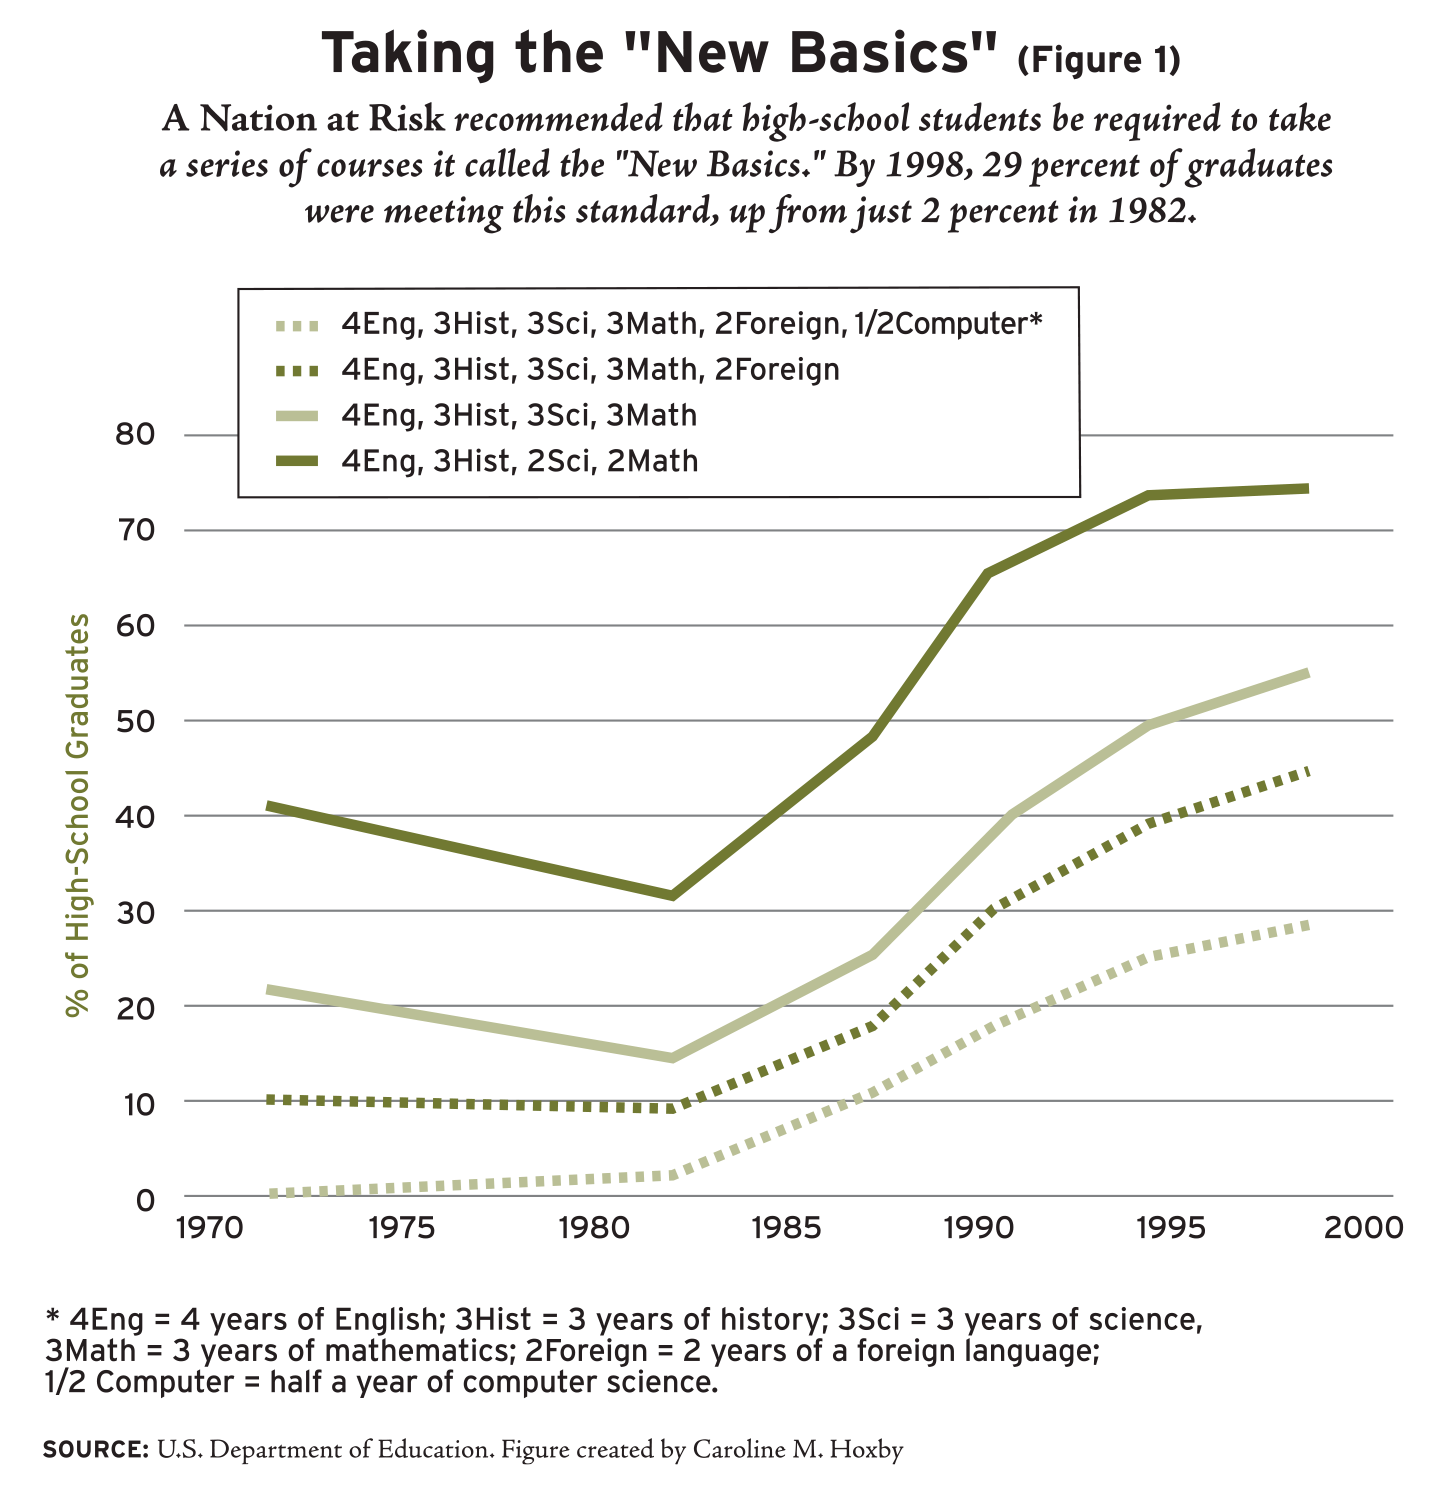 Figure 1: Taking the "New Basics"